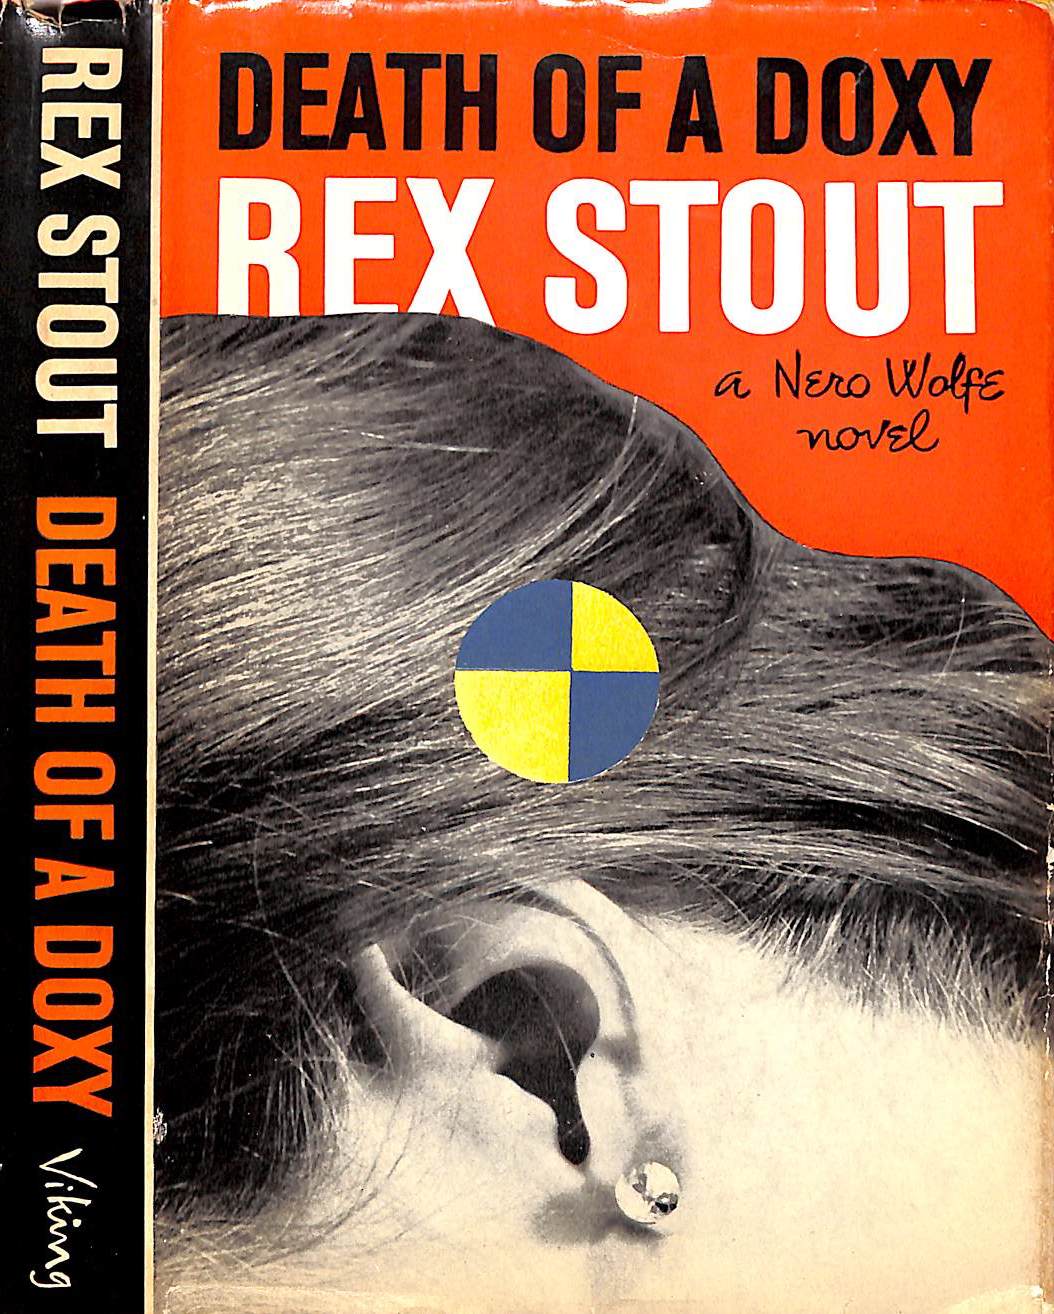 "Death Of A Doxy" 1966 STOUT, Rex